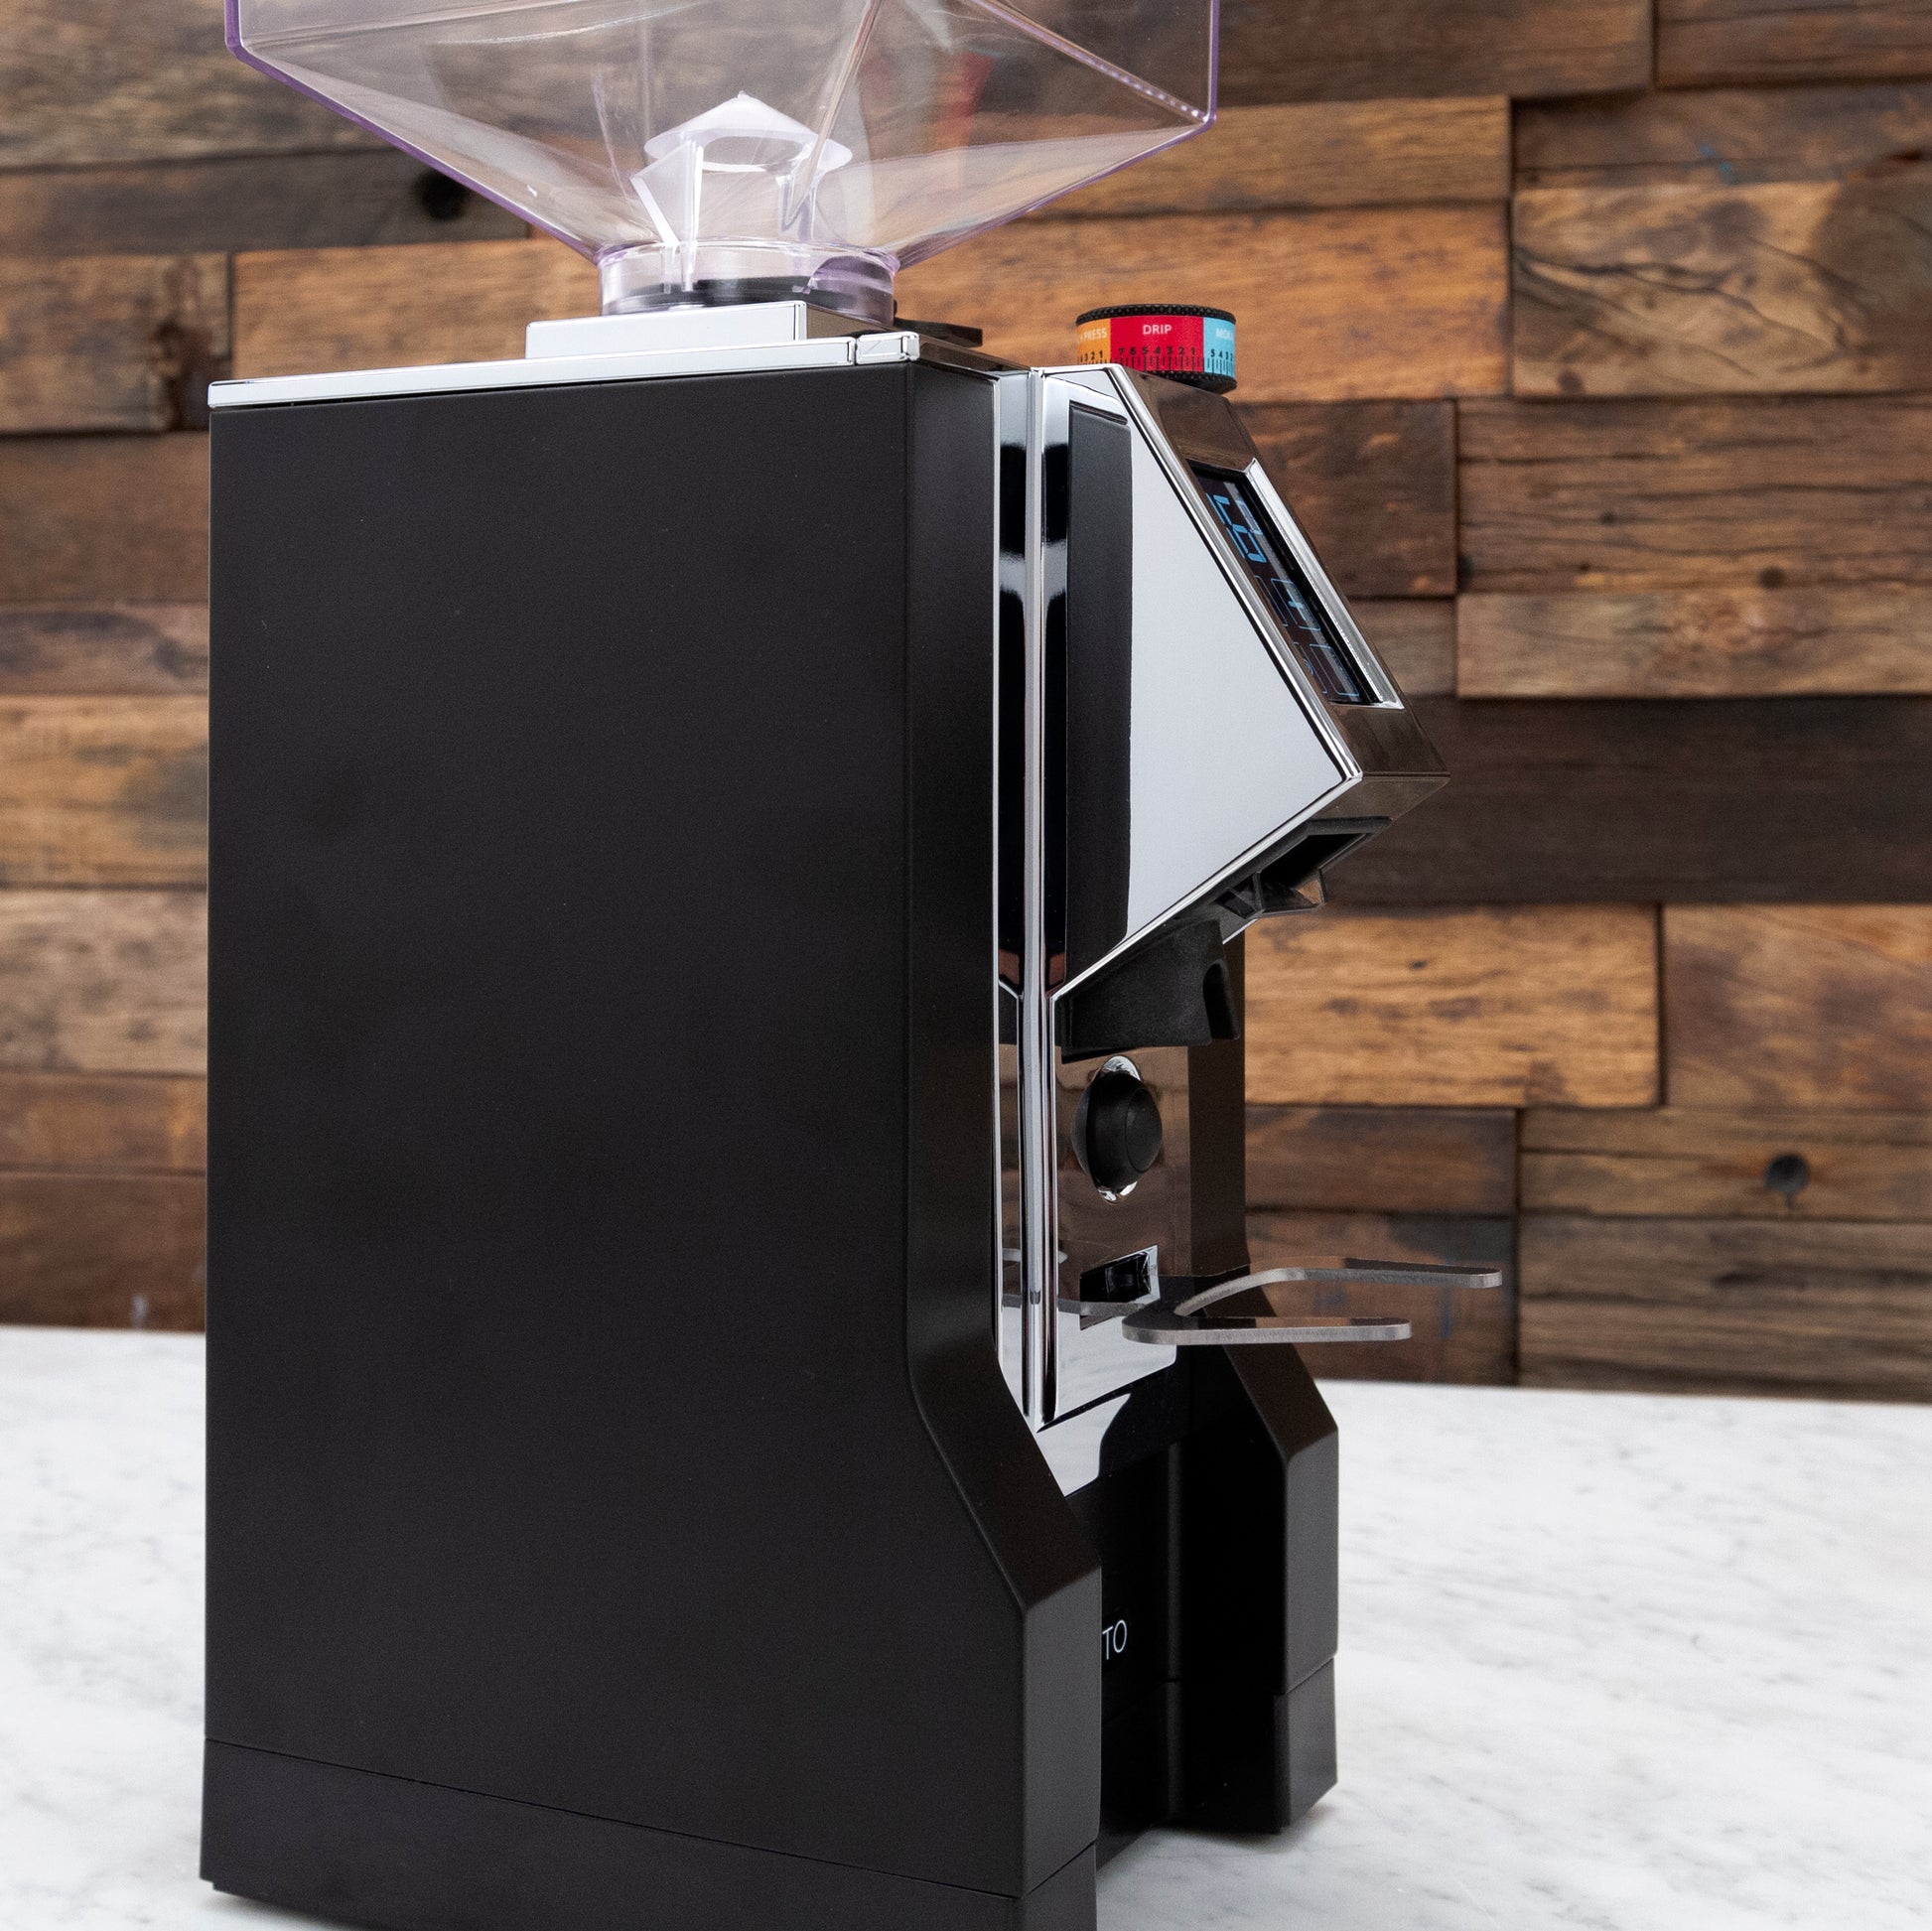 Coffee Station Fixation: 12 Quick-n-Easy Coffee Bar Ideas!